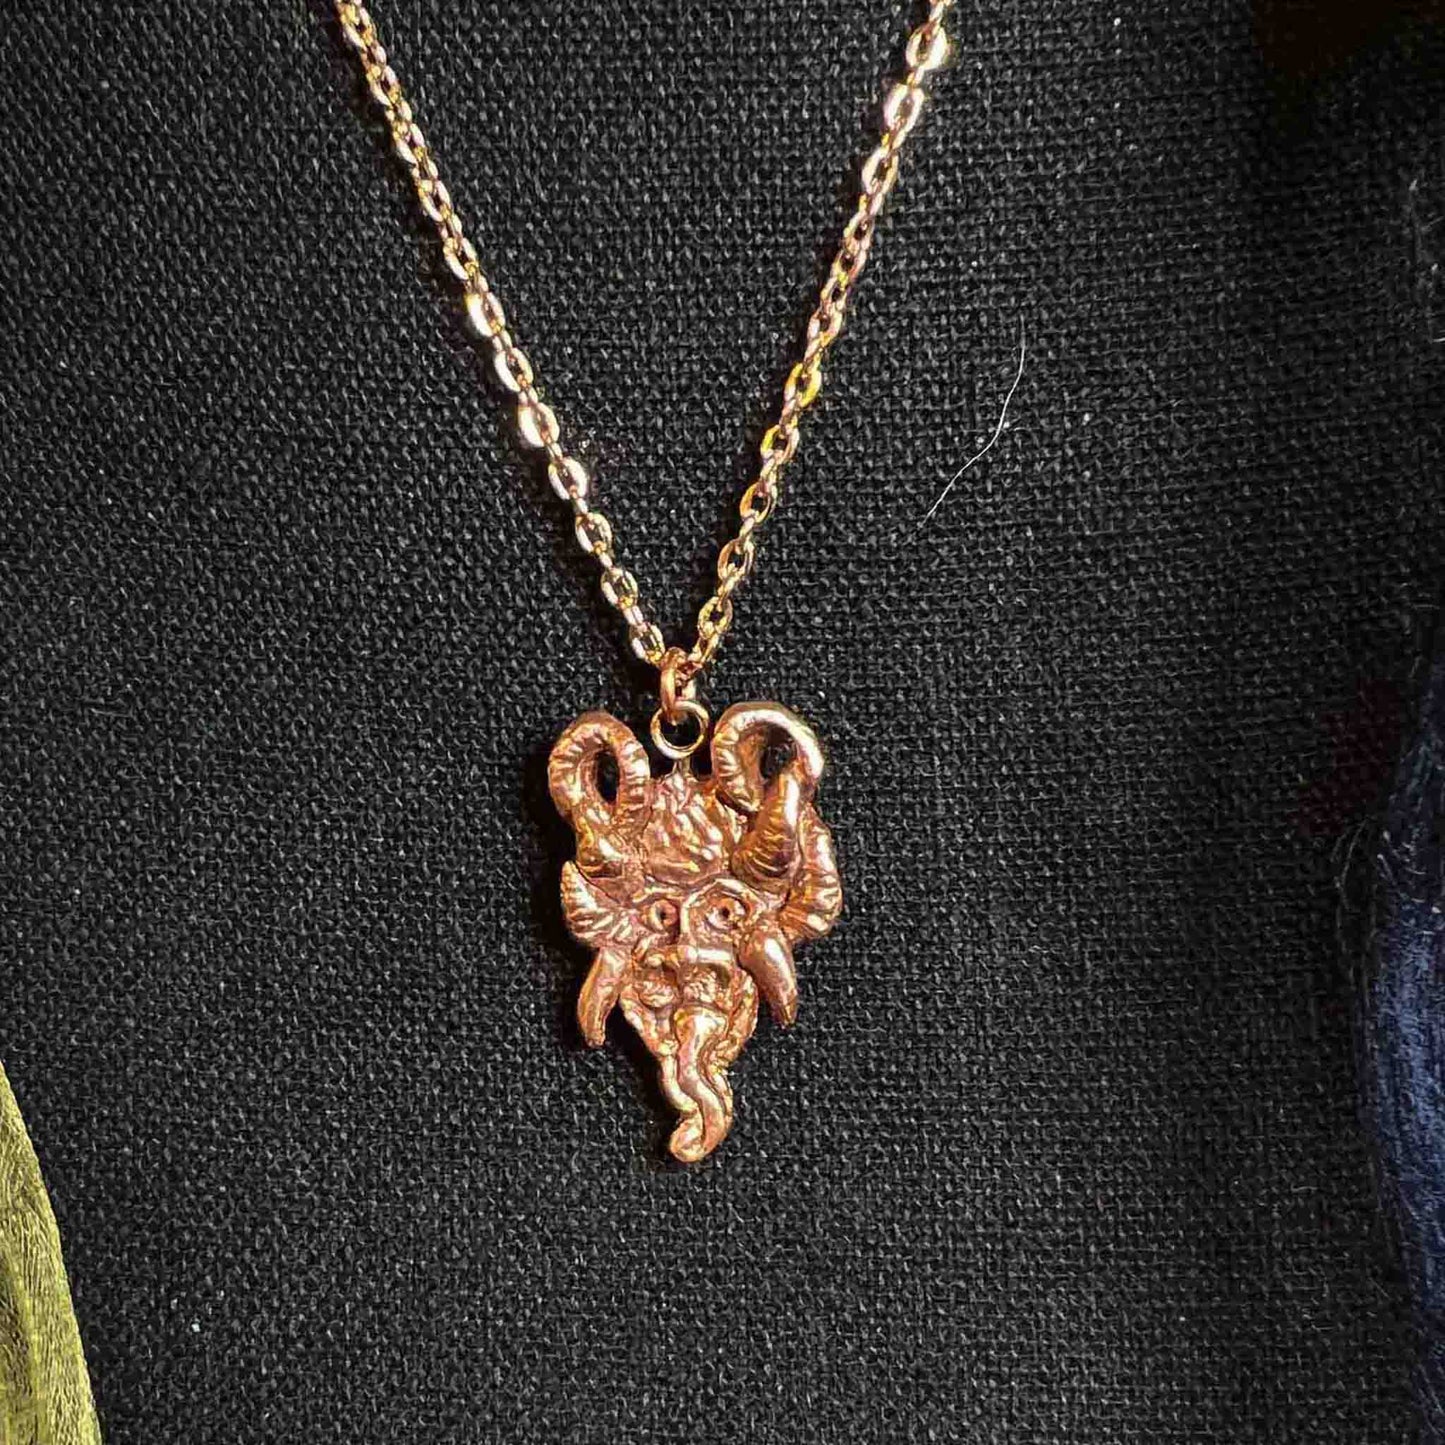 Krampus pendant; necklace; copper; handmade; Krampusnacht; alternative; Christmas; holiday jewelry; gift idea; cryptids; German; Austrian; legend; monster